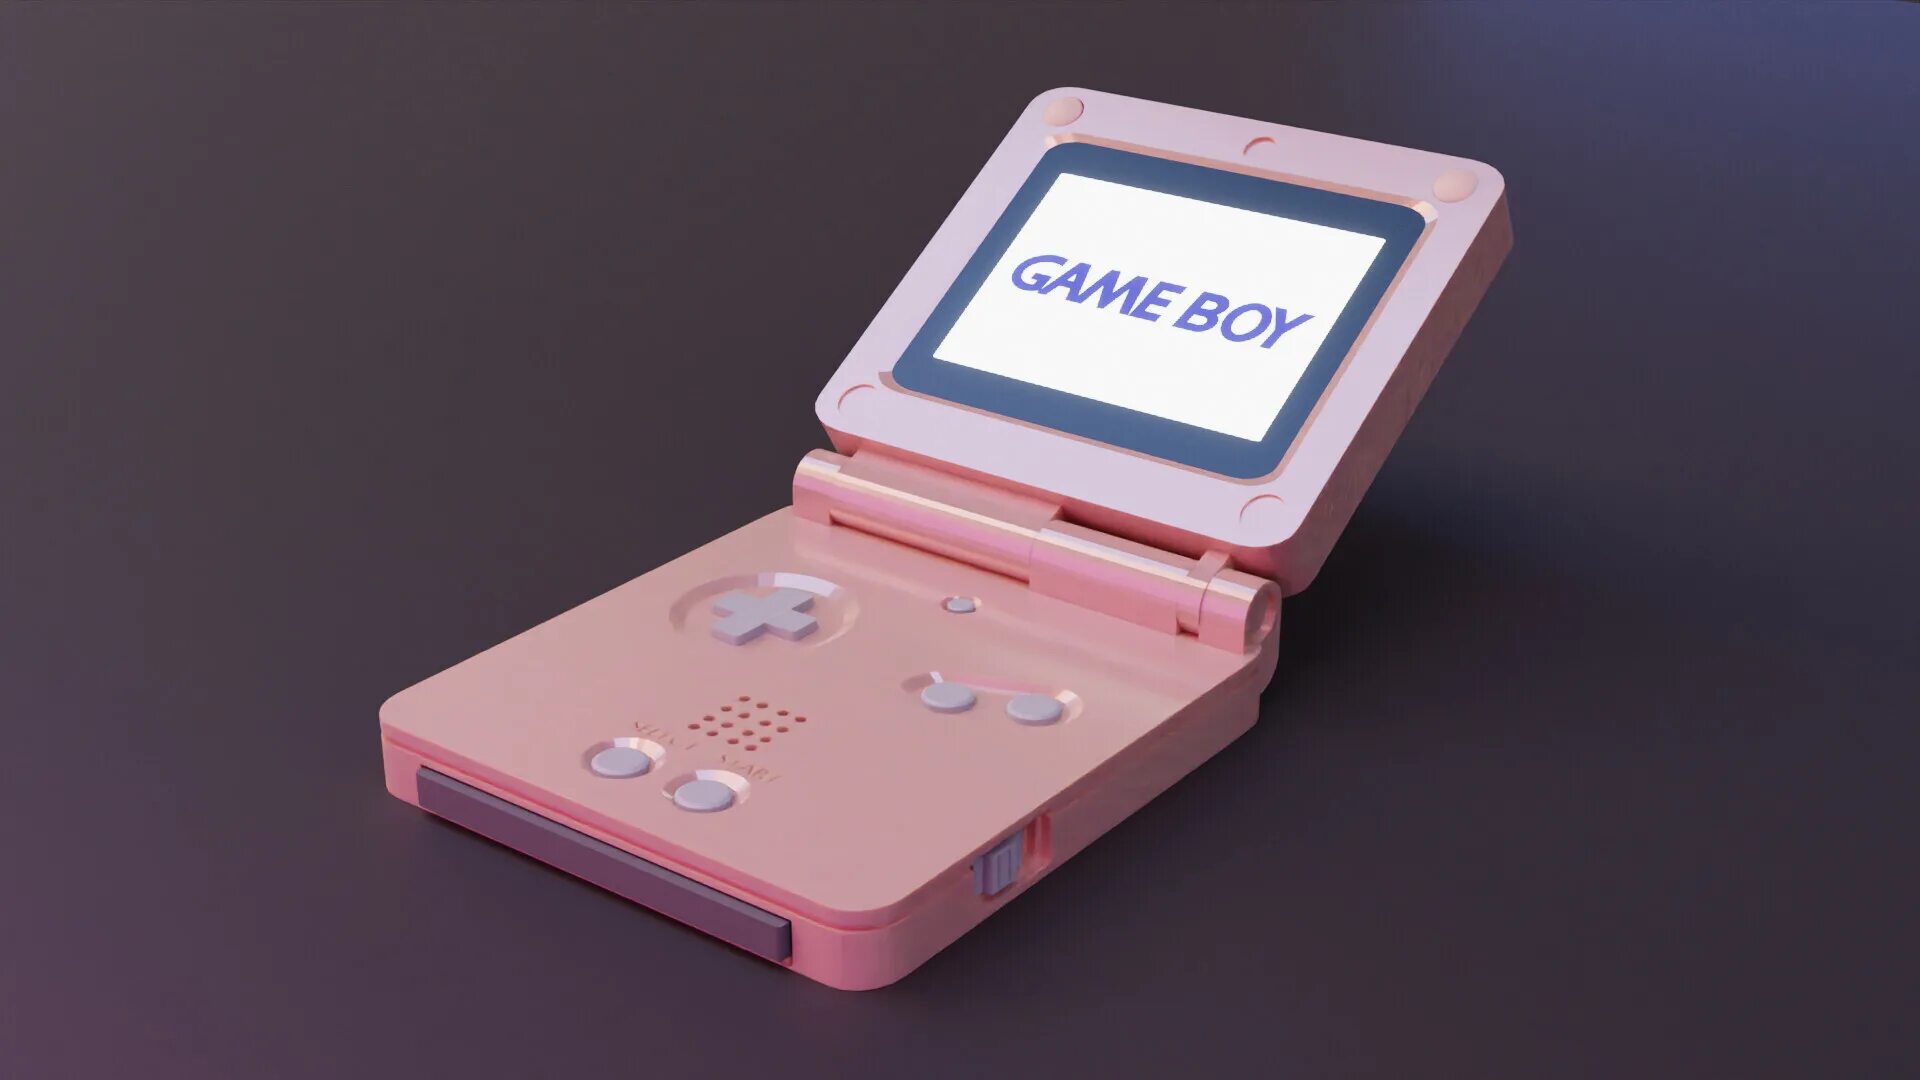 Геймбой 3д. Game boy Advance SP розовая. Nintendo game boy Advance SP. Nintendo модели